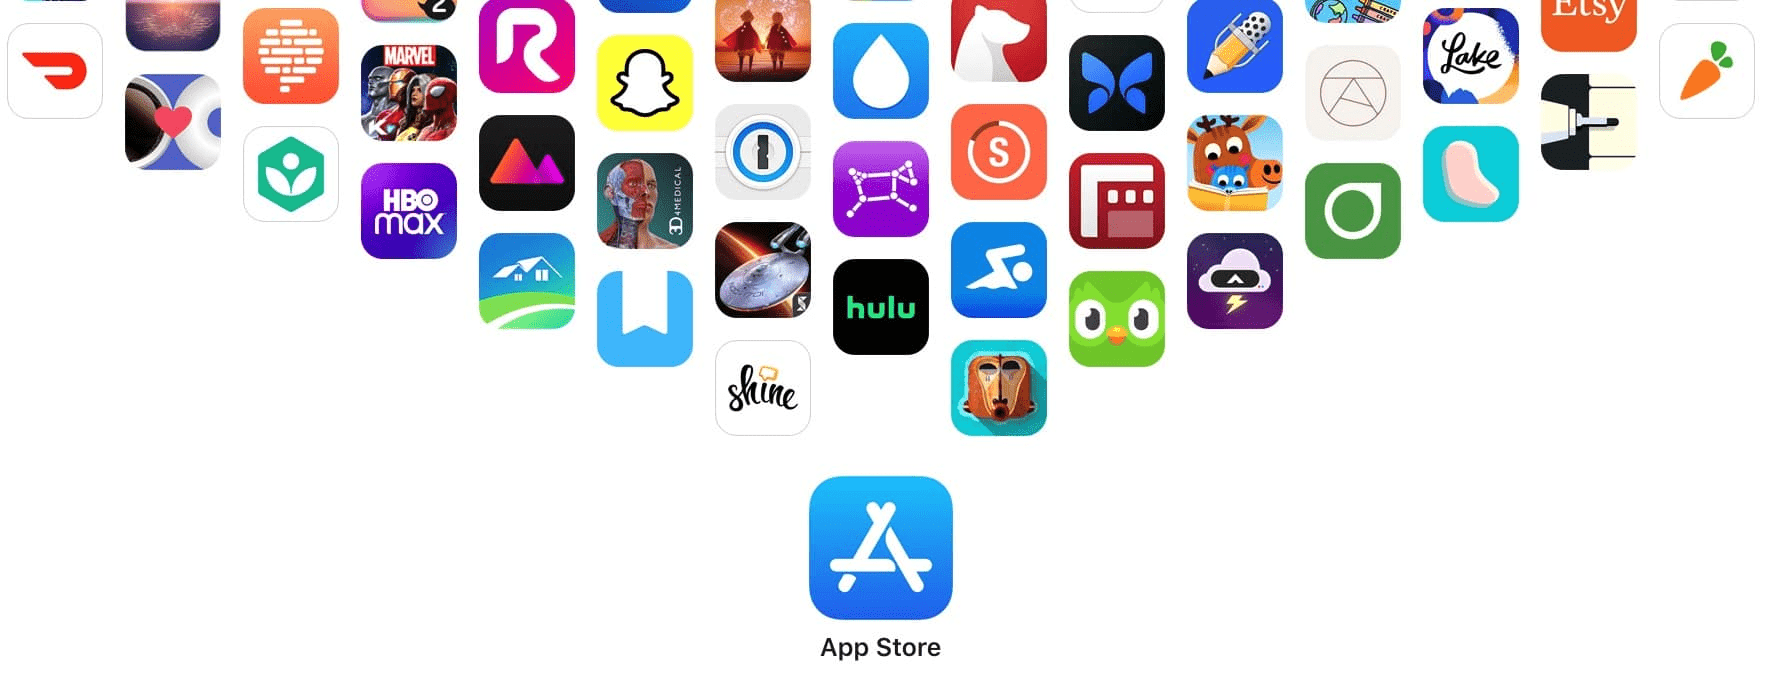 app store
apple epic